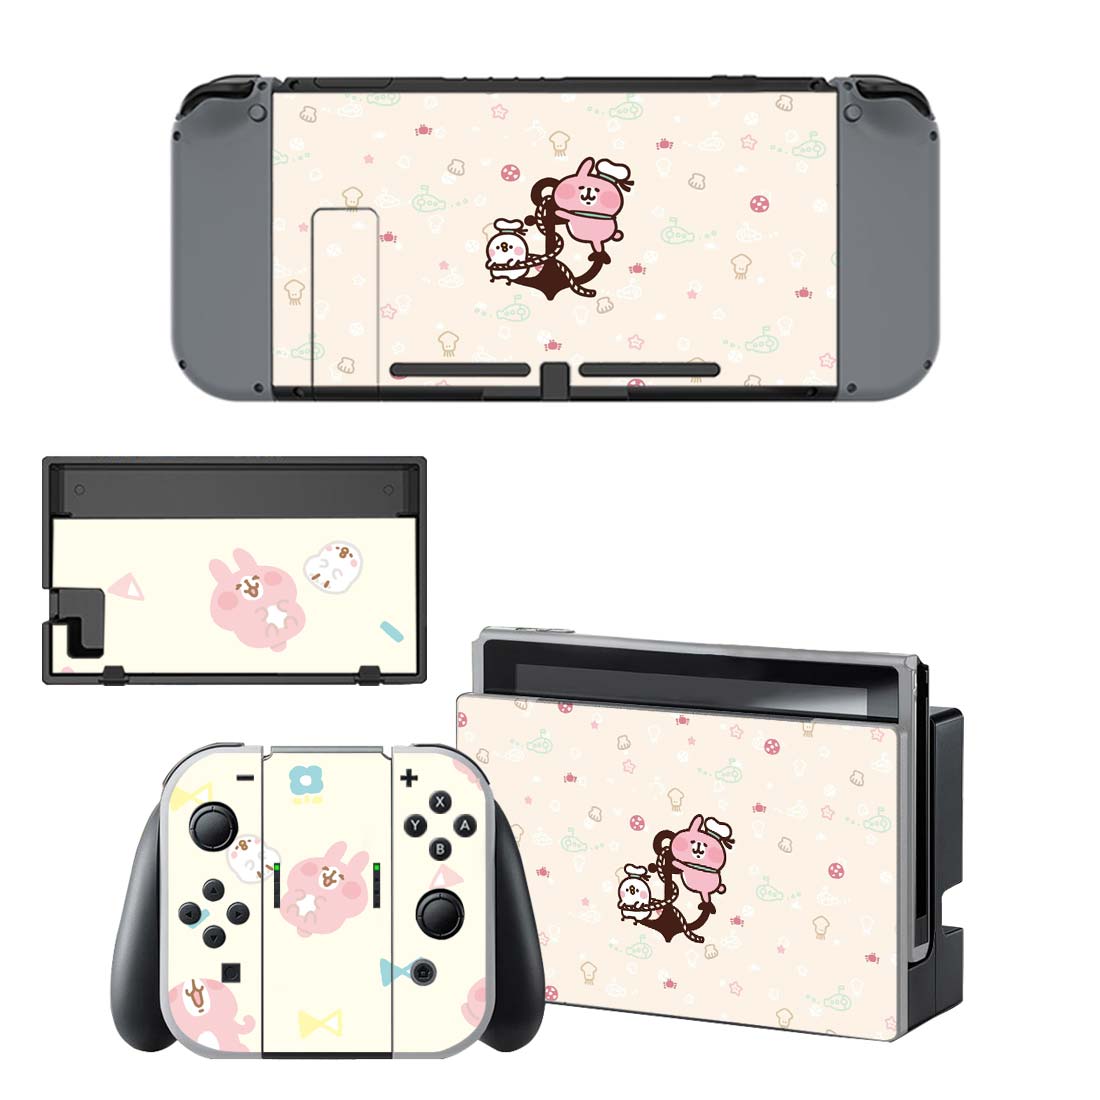 Kanahei Nintendo Switch Skin Sticker Decal Design 3